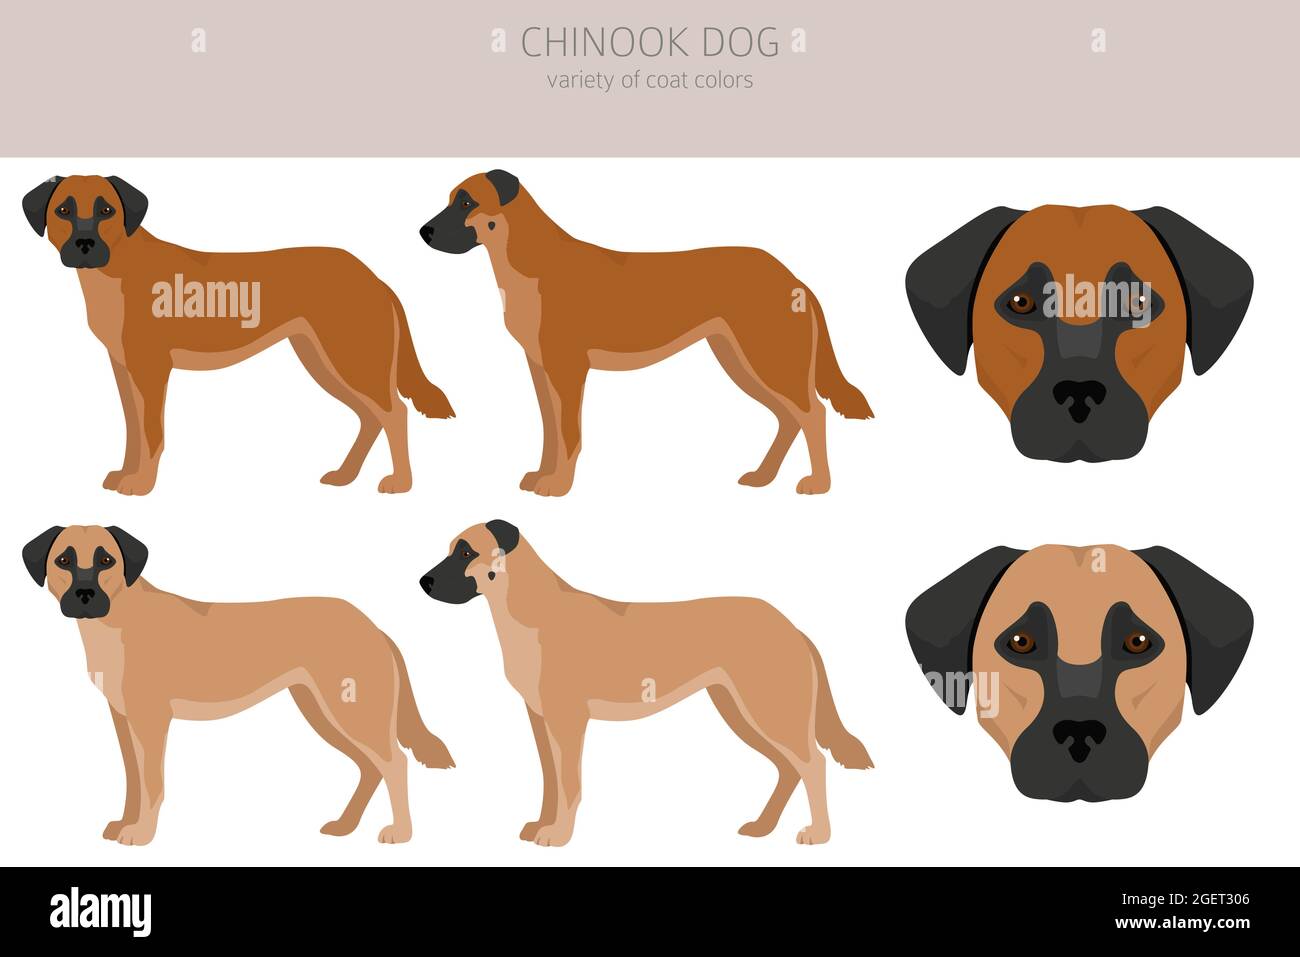 Chinook Hund Clipart. Verschiedene Posen, Fellfarben eingestellt.  Vektorgrafik Stock-Vektorgrafik - Alamy